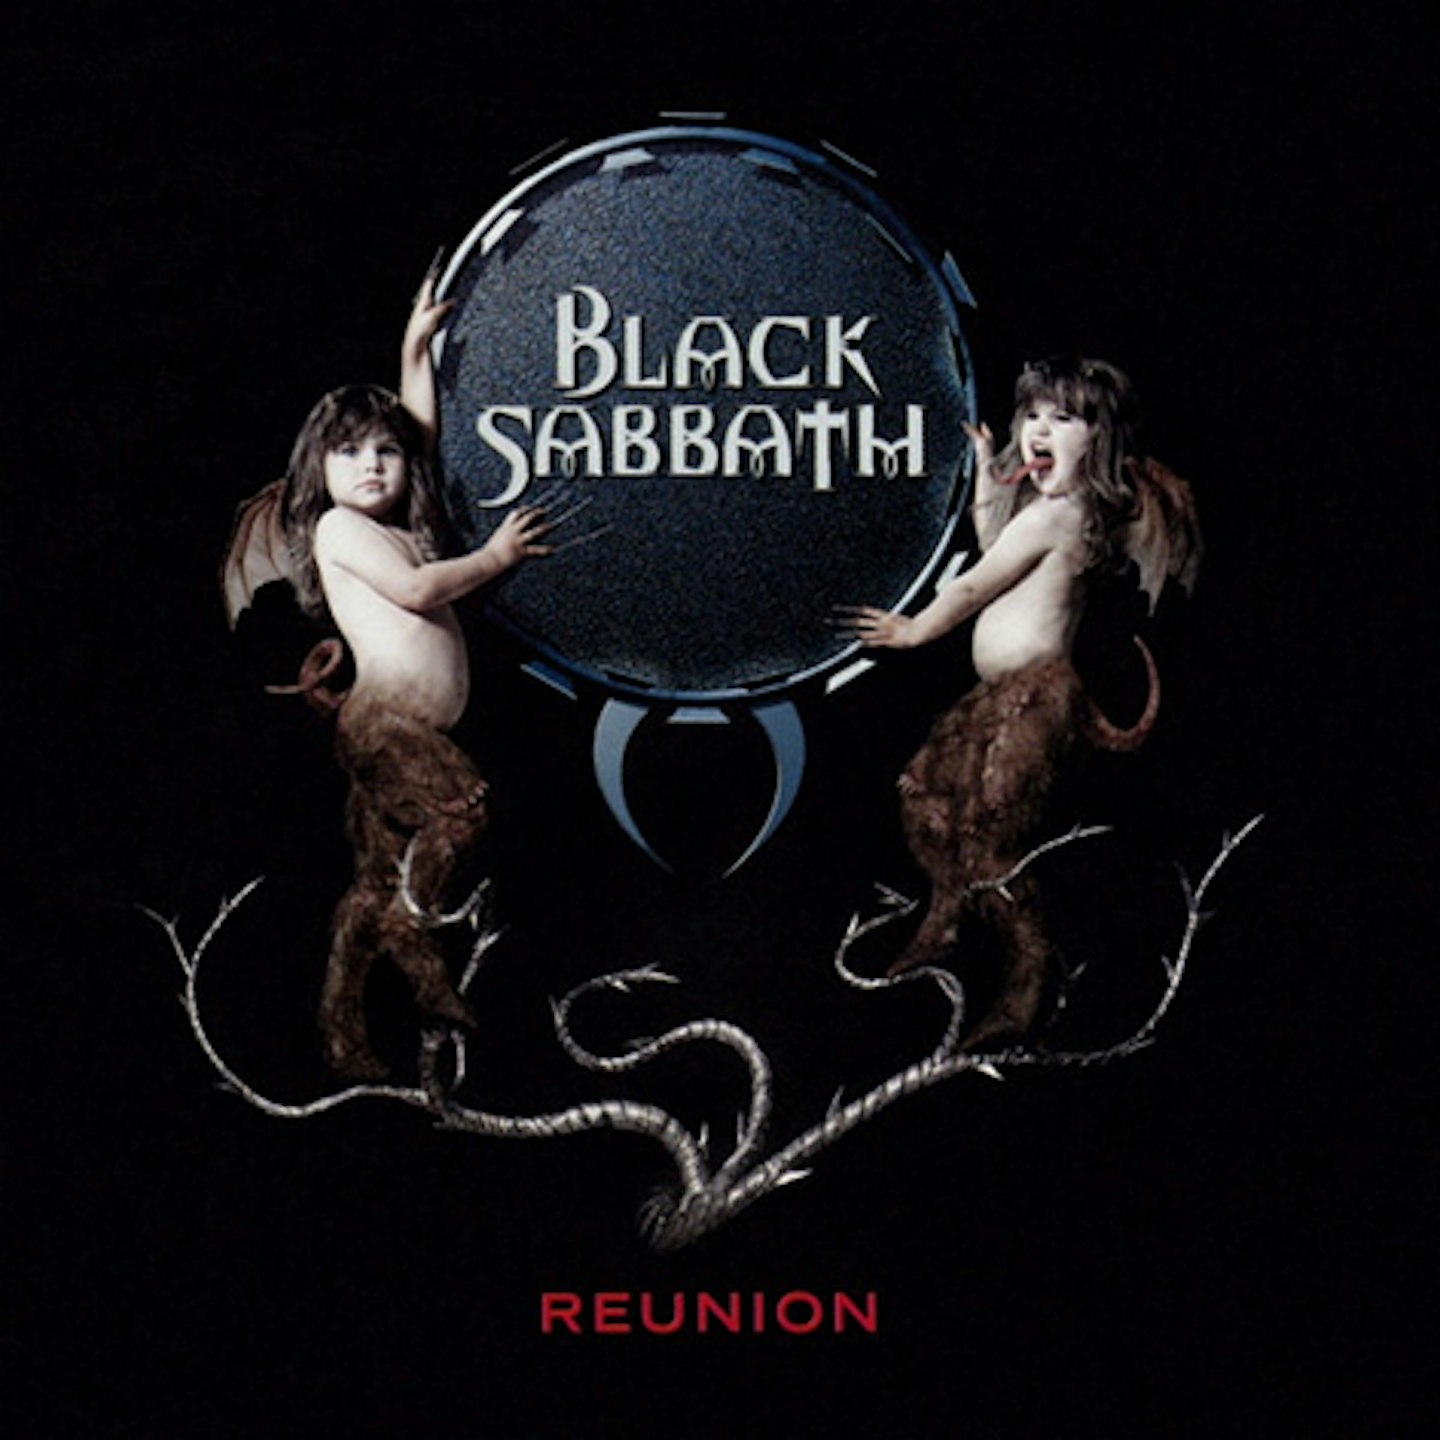 Black Sabbath: Every album ranked from worst to best